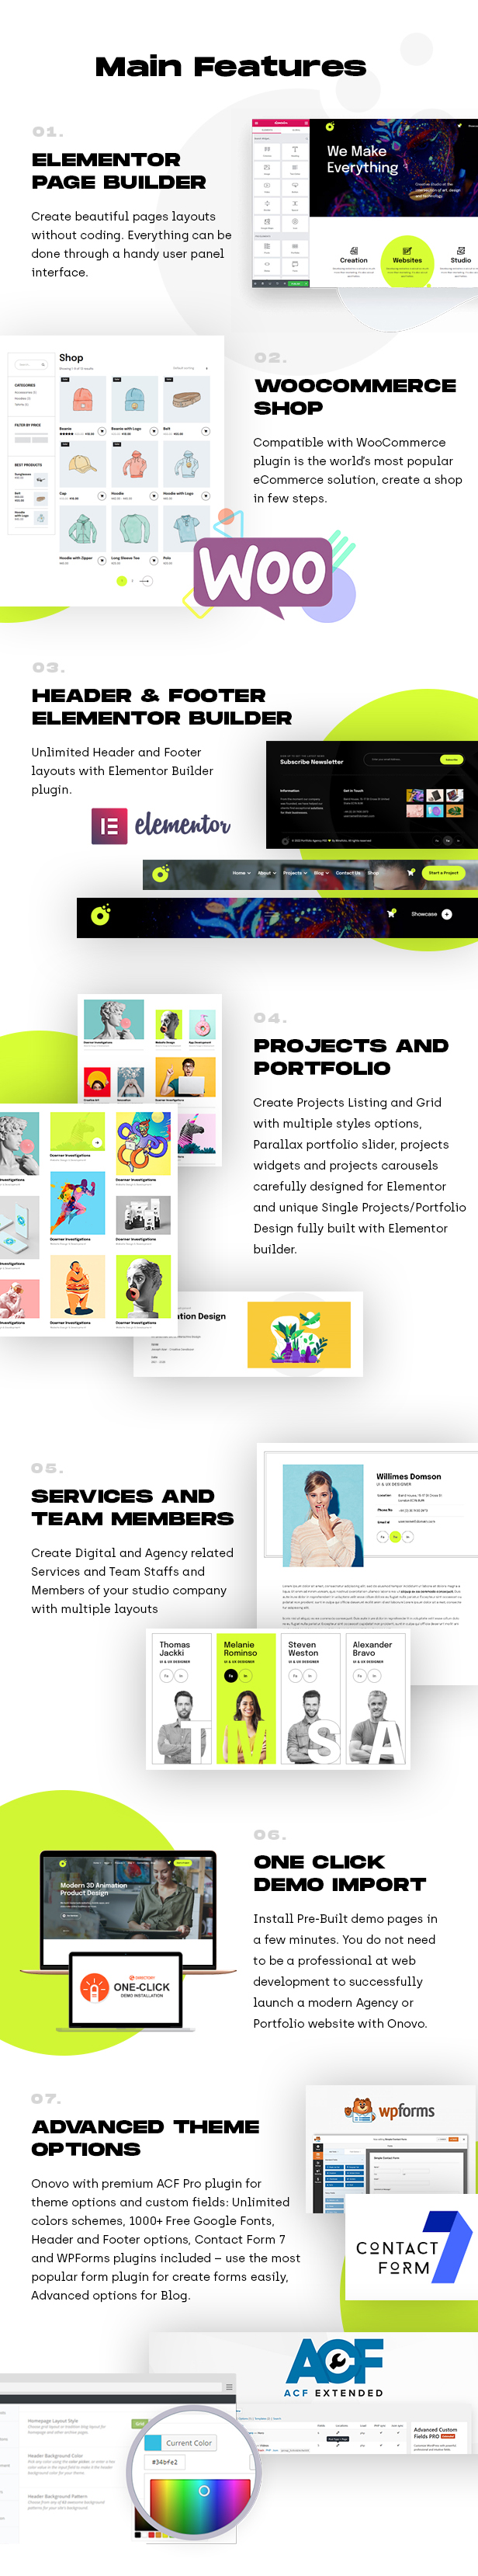 Onovo Portfolio Agency WordPress Theme - Description 4